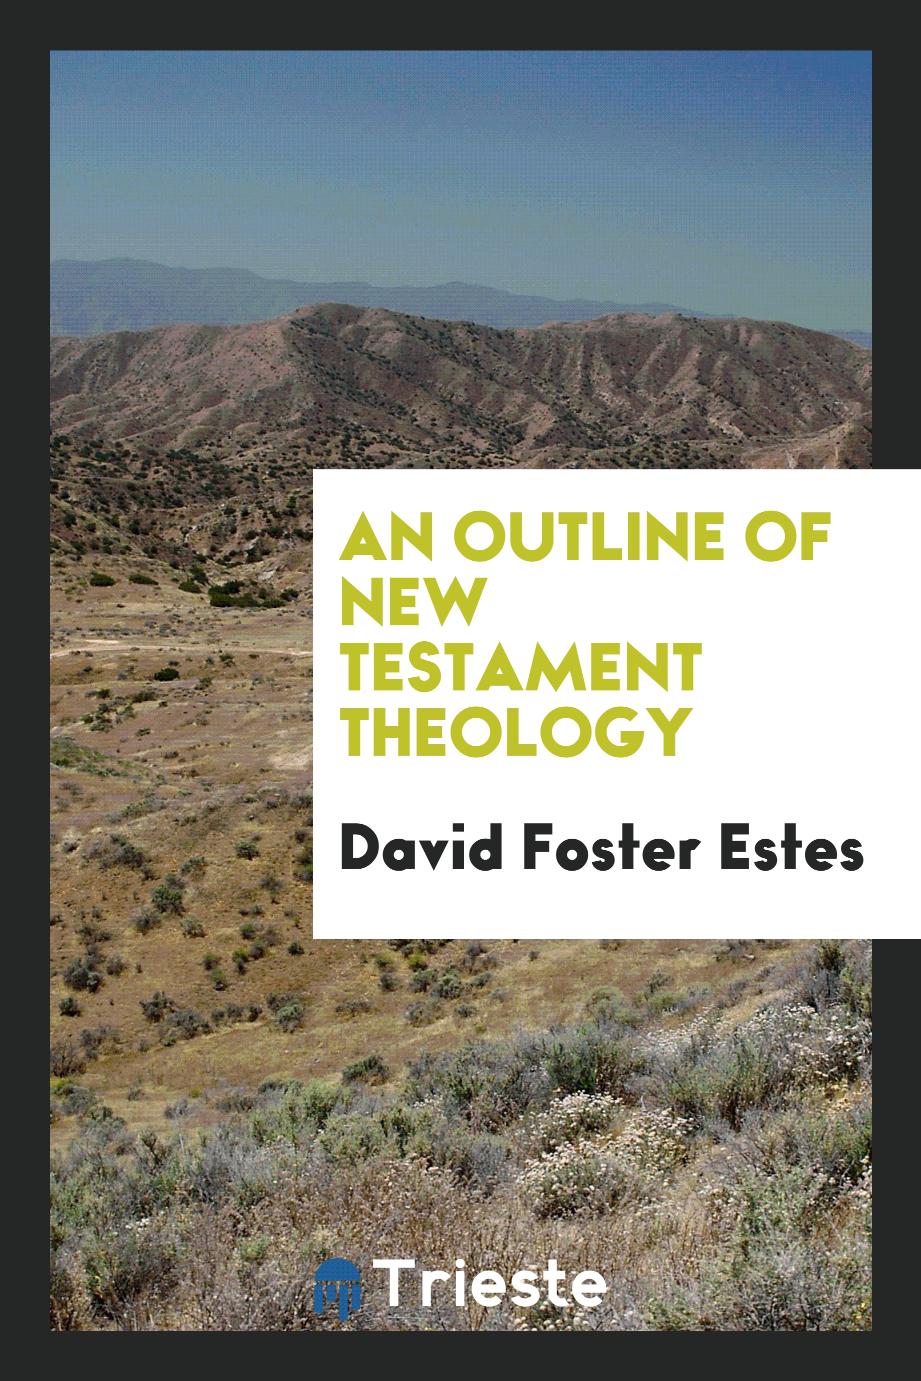 David Foster Estes - An outline of New Testament theology